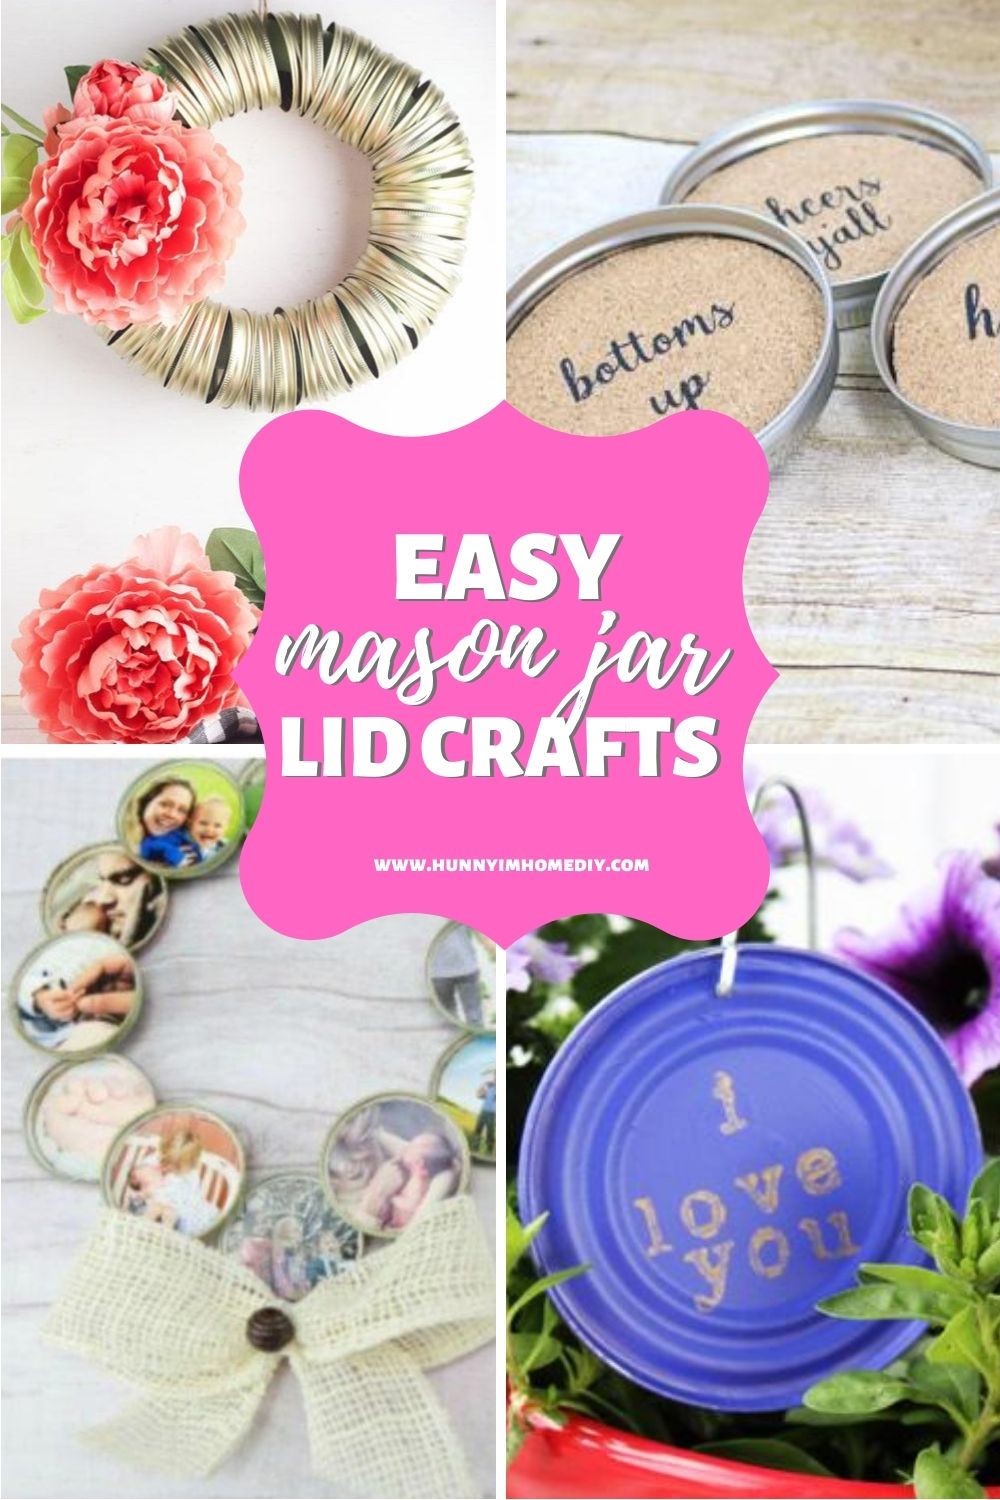 10 Easy Mason Jar Lid Craft Ideas | Hunny I'm Home